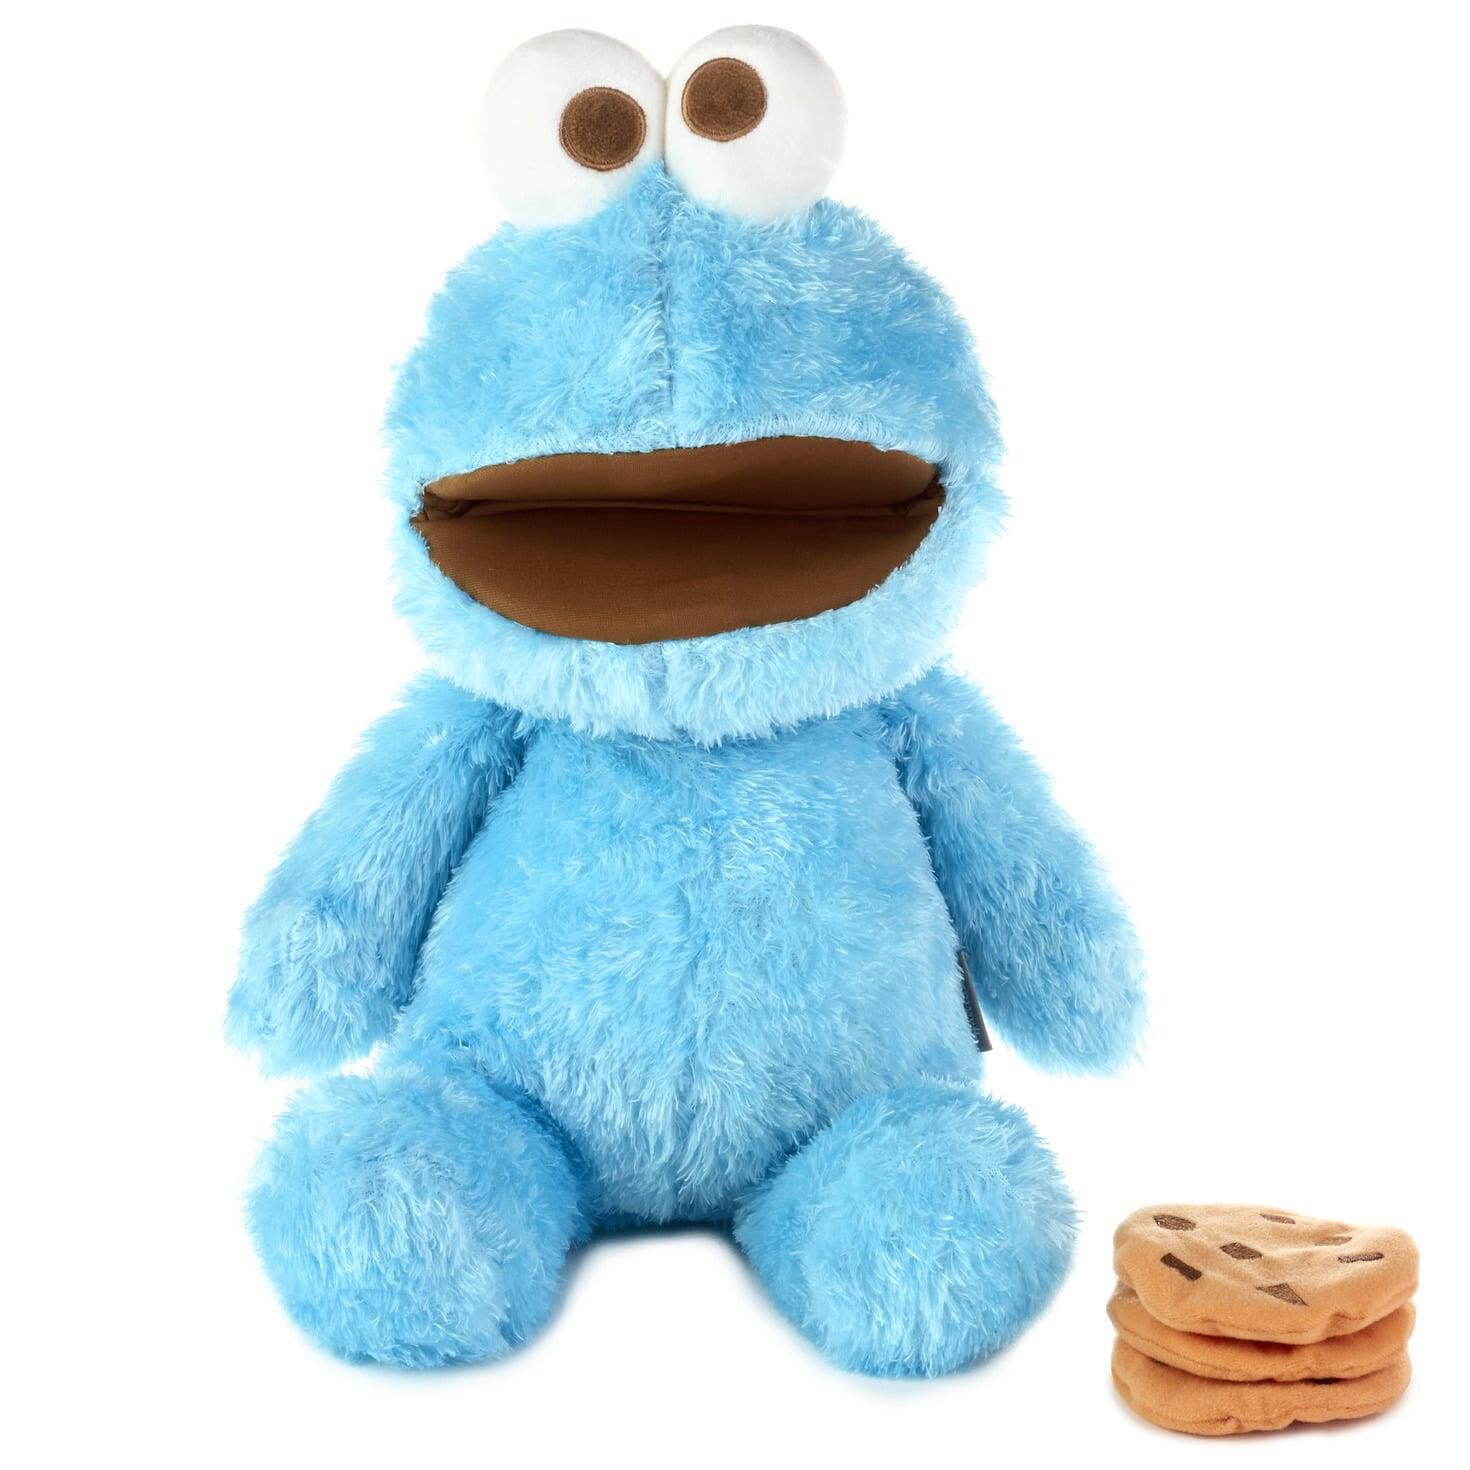 cookie monster stuffed